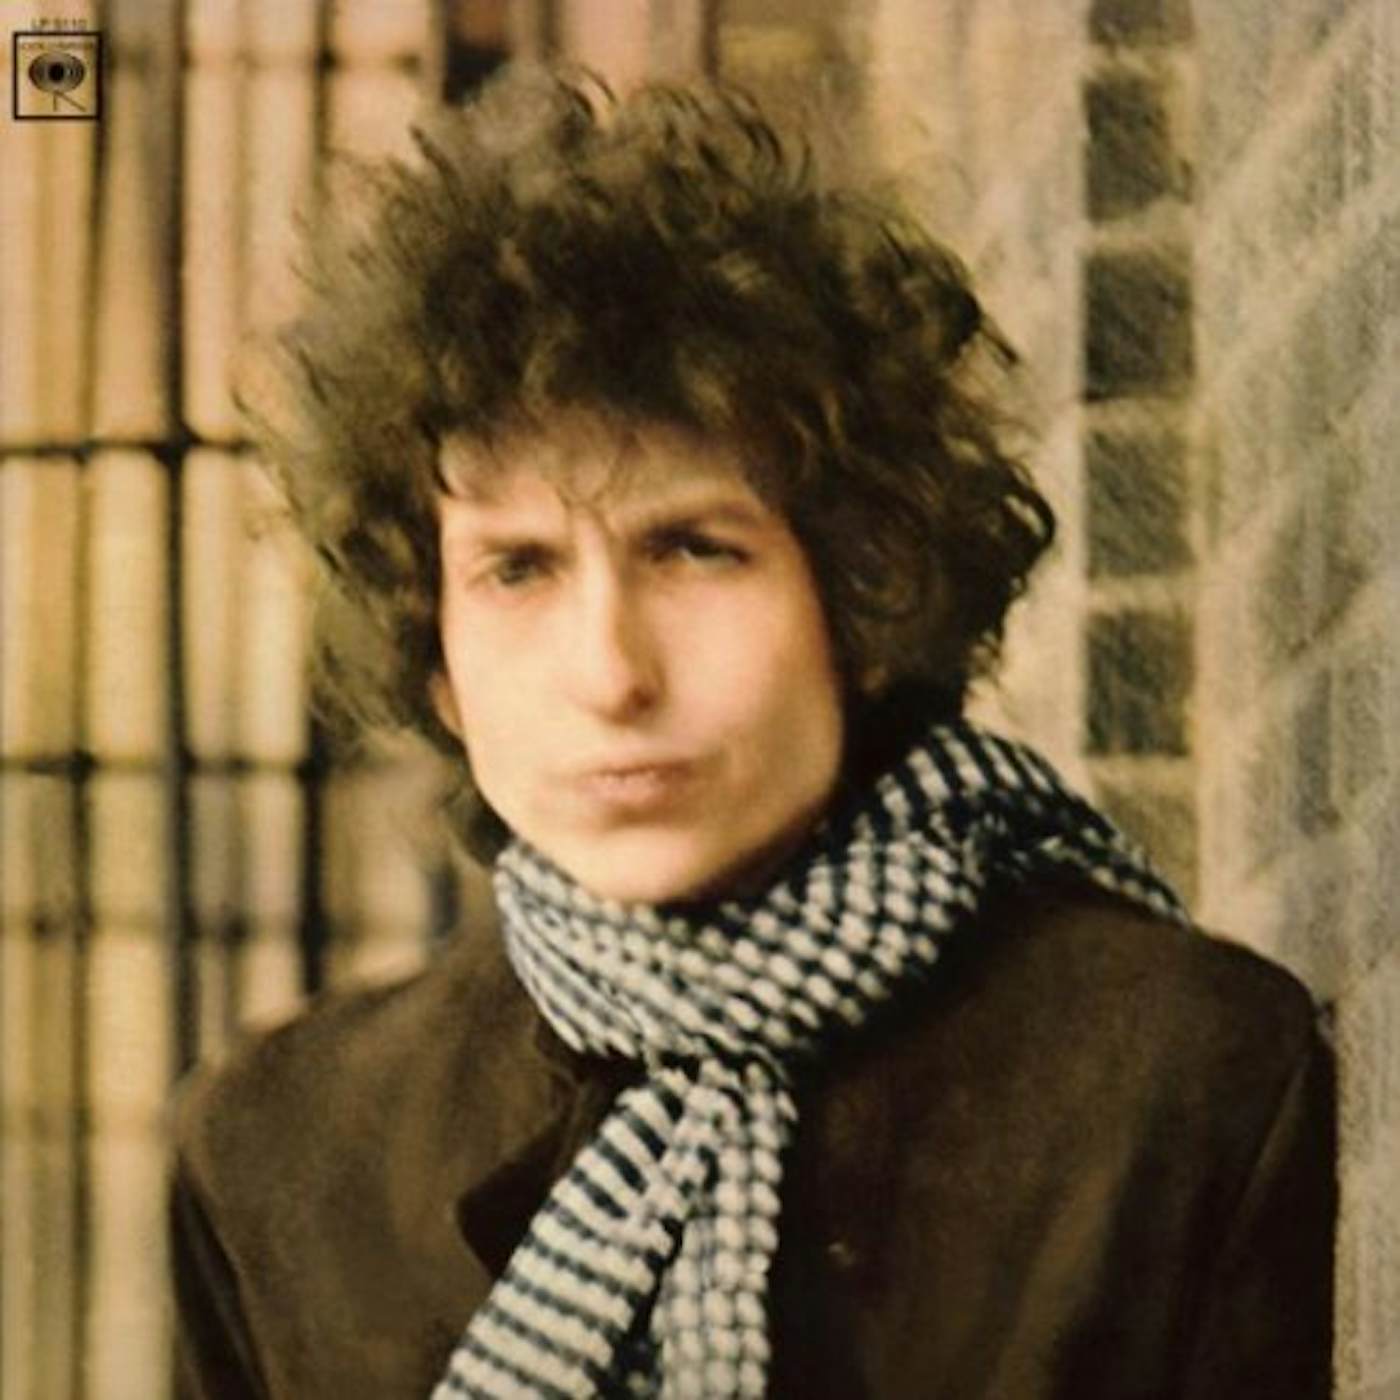 Bob Dylan Blonde On Blonde Vinyl Record